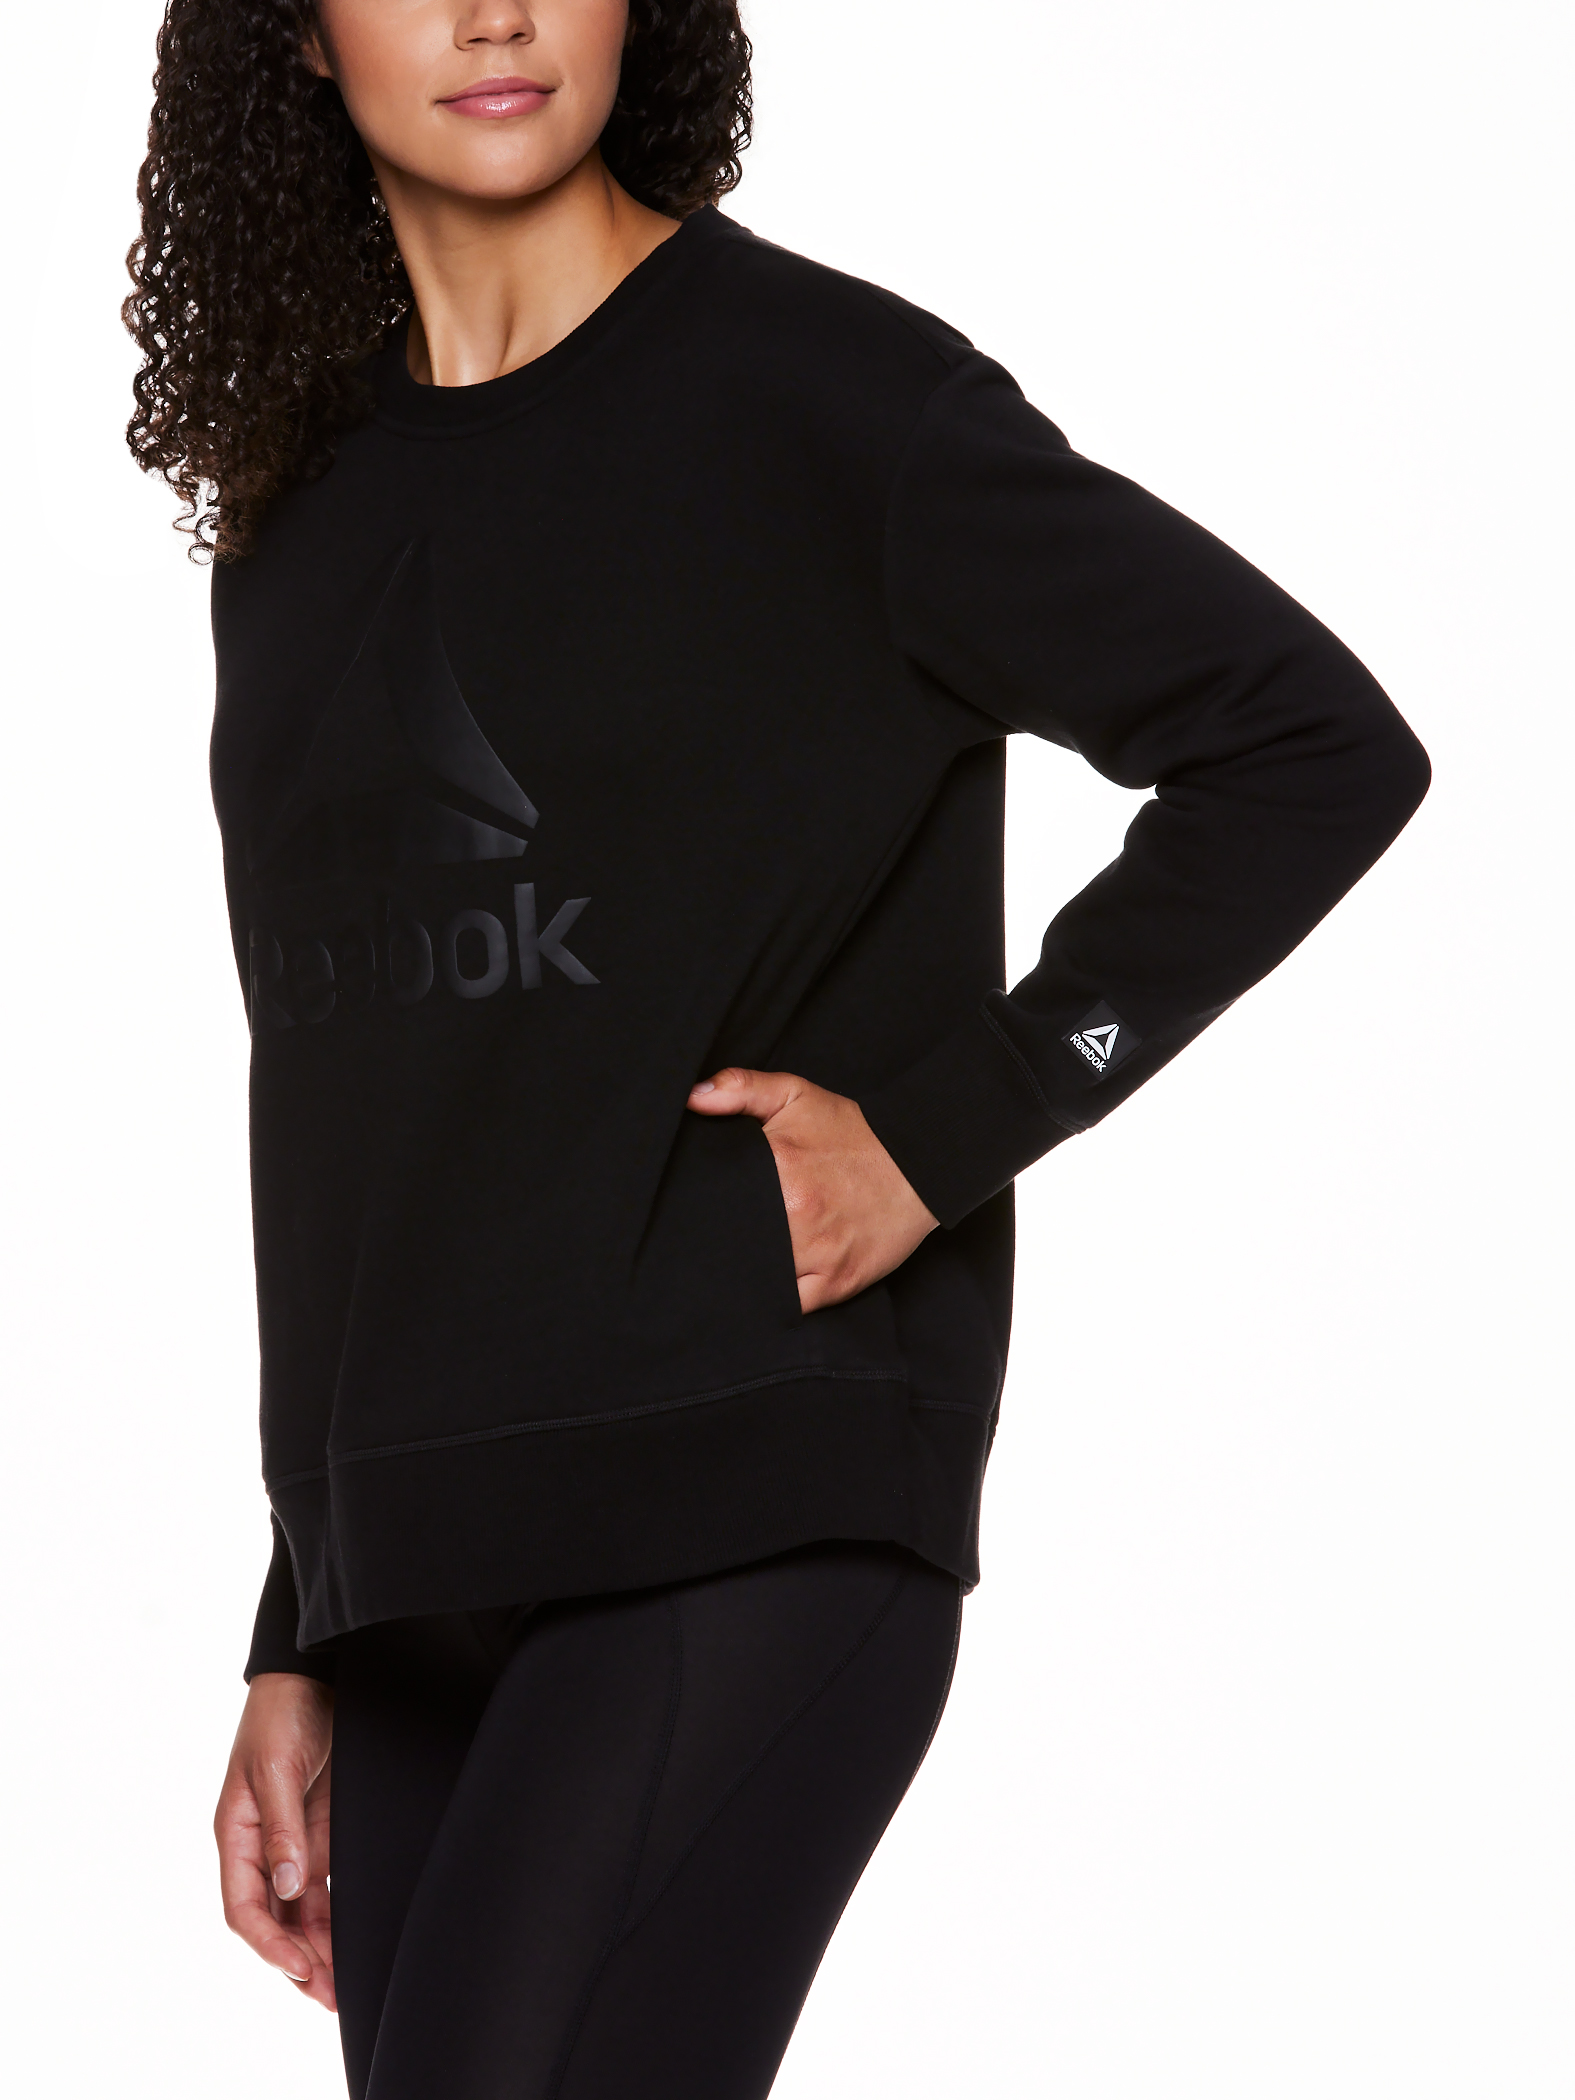 Reebok Women's Supersoft Gravity Crewneck Sweatshirt with Side Pockets - image 2 of 7